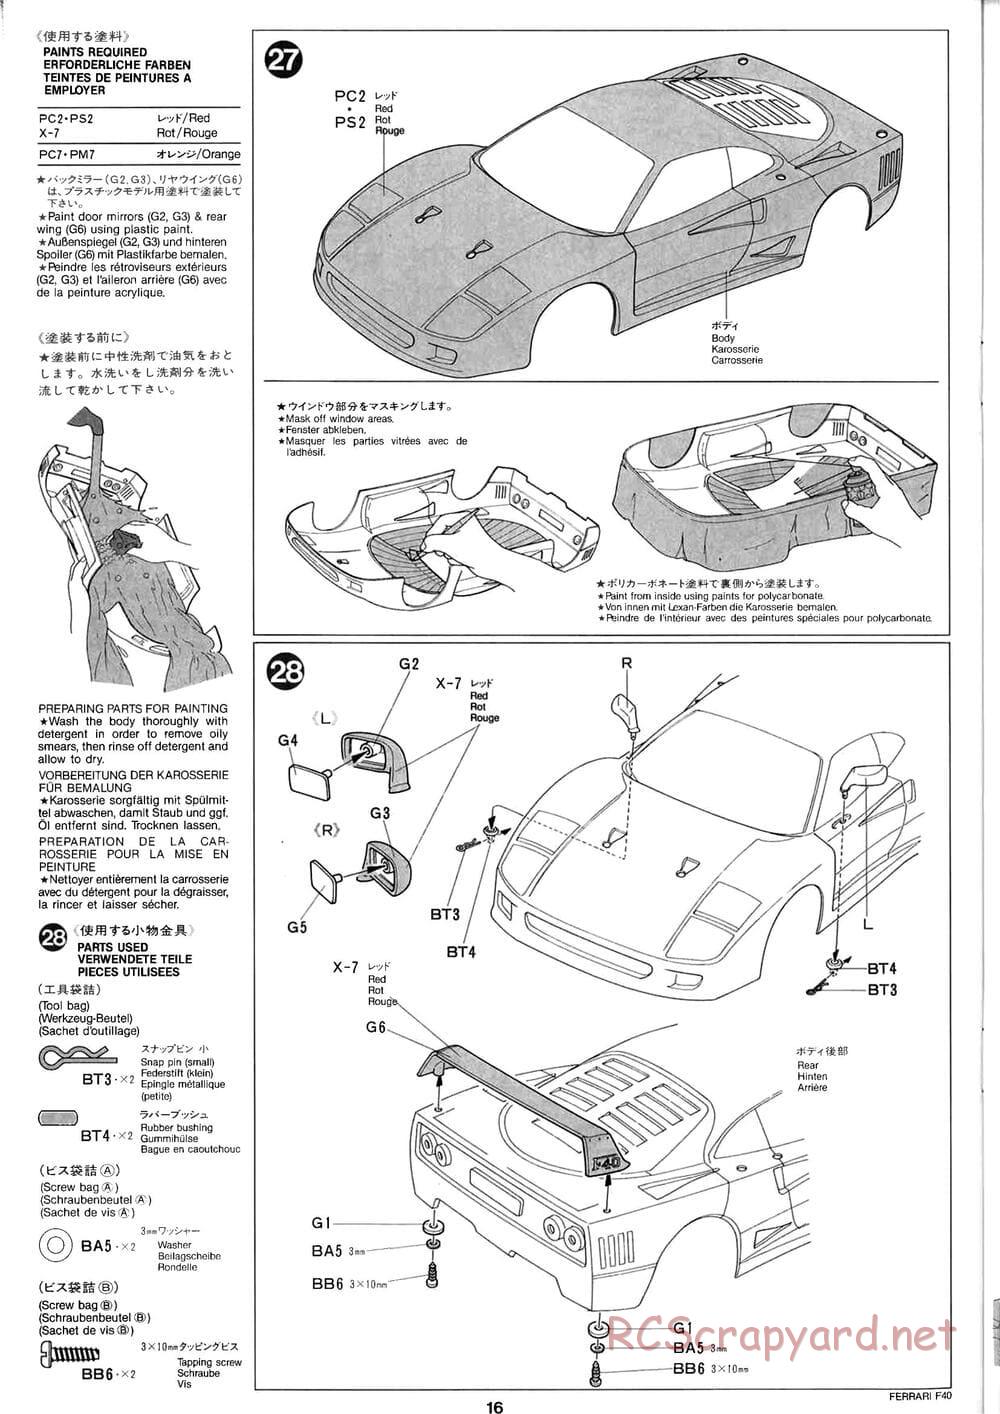 Tamiya - Ferrari F40 - Group-C Chassis - Manual - Page 16